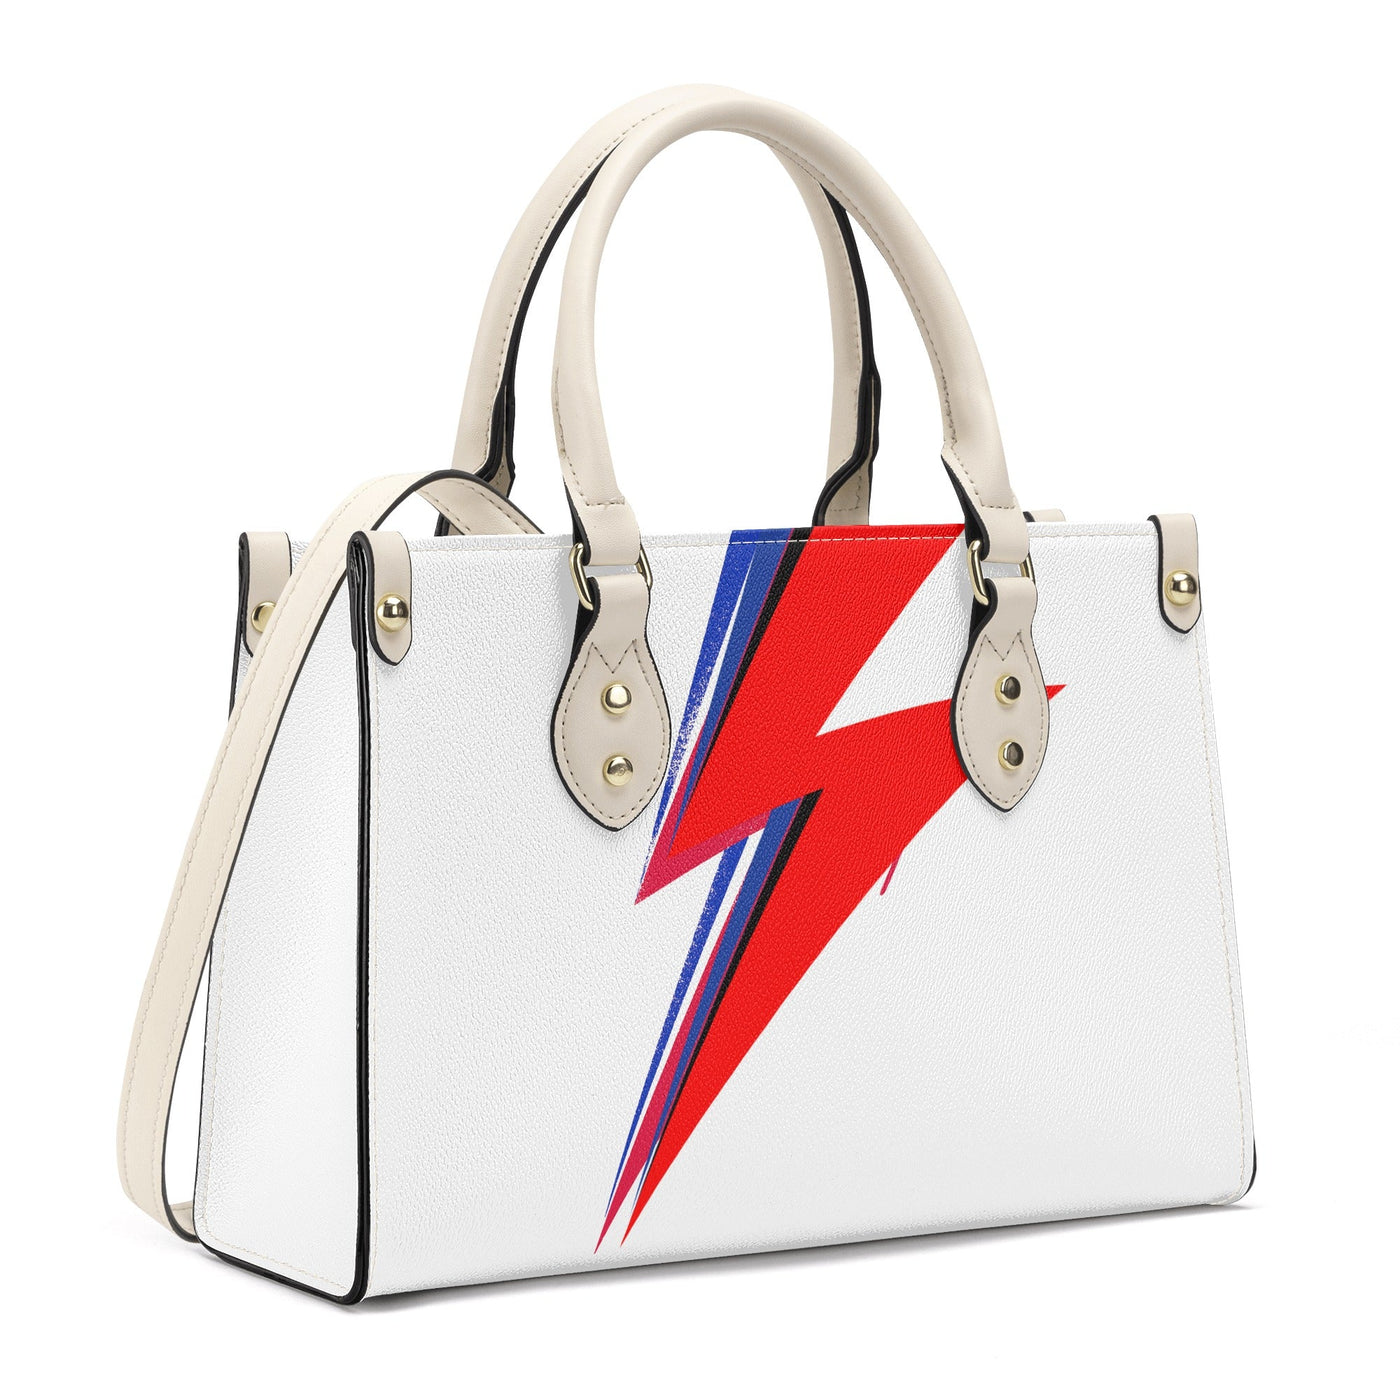 Bowie Thunderbolt Luxury Tote Handbag